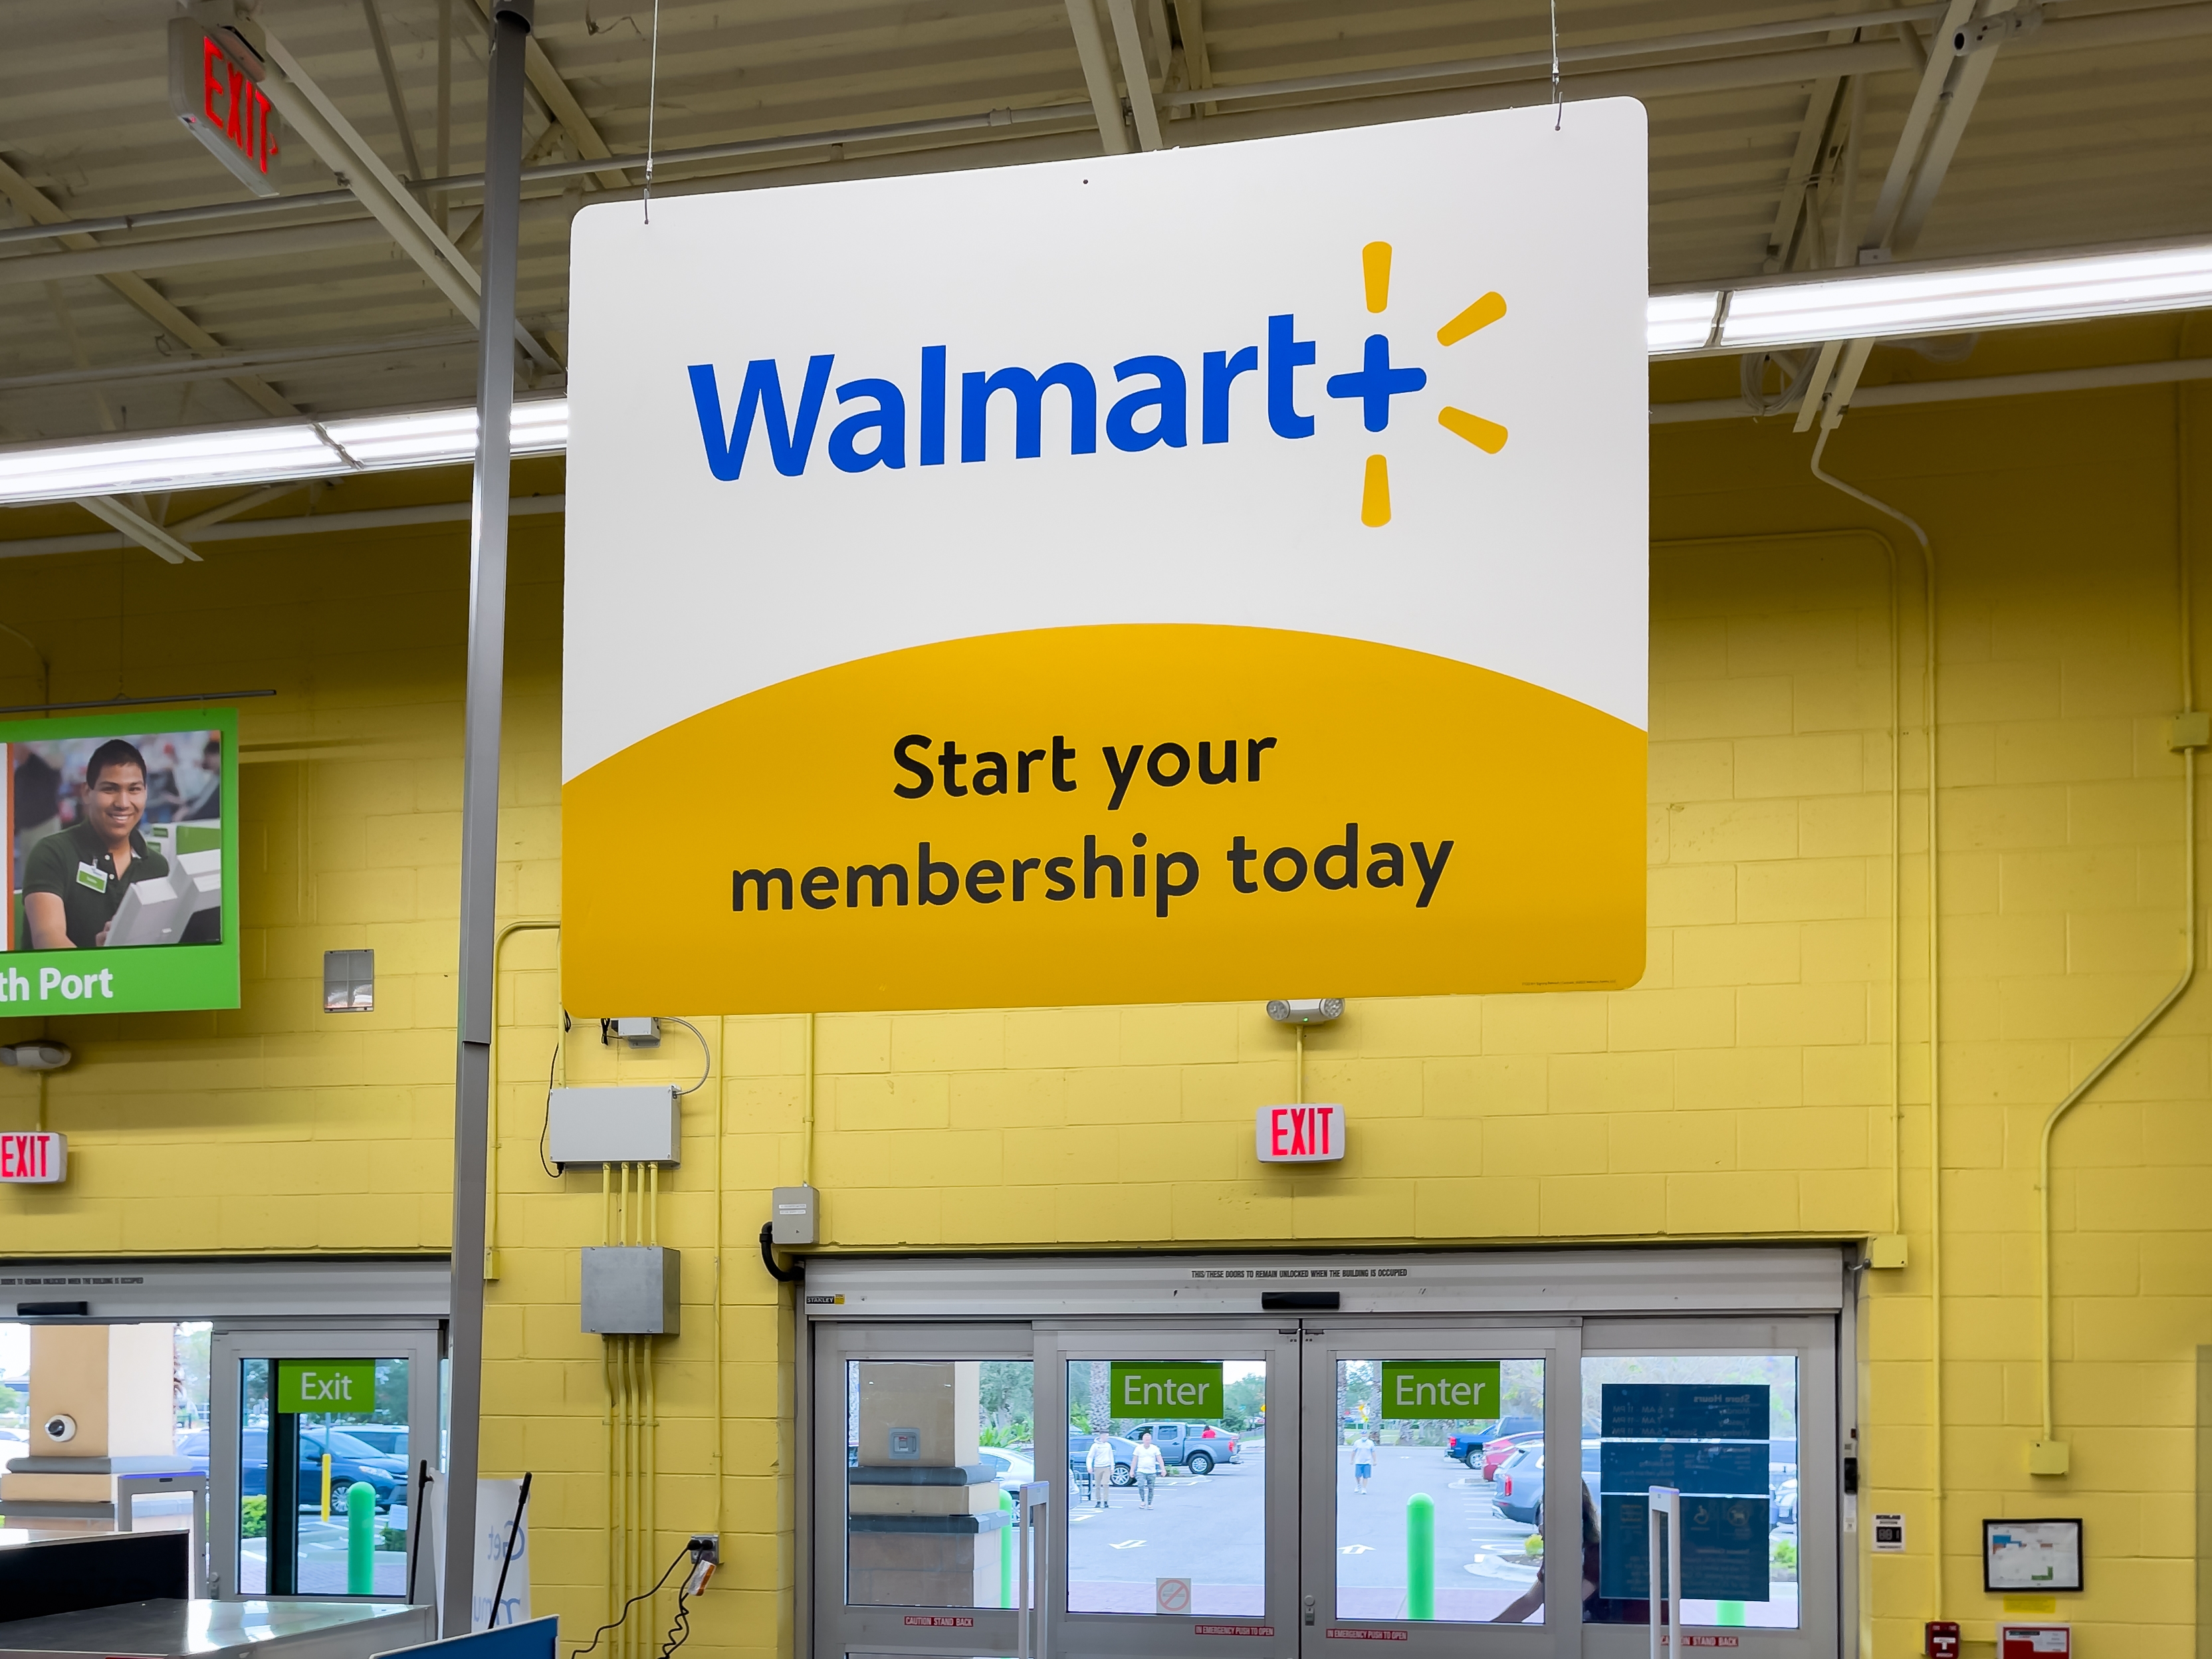 Sign advertising a Walmart+ membership